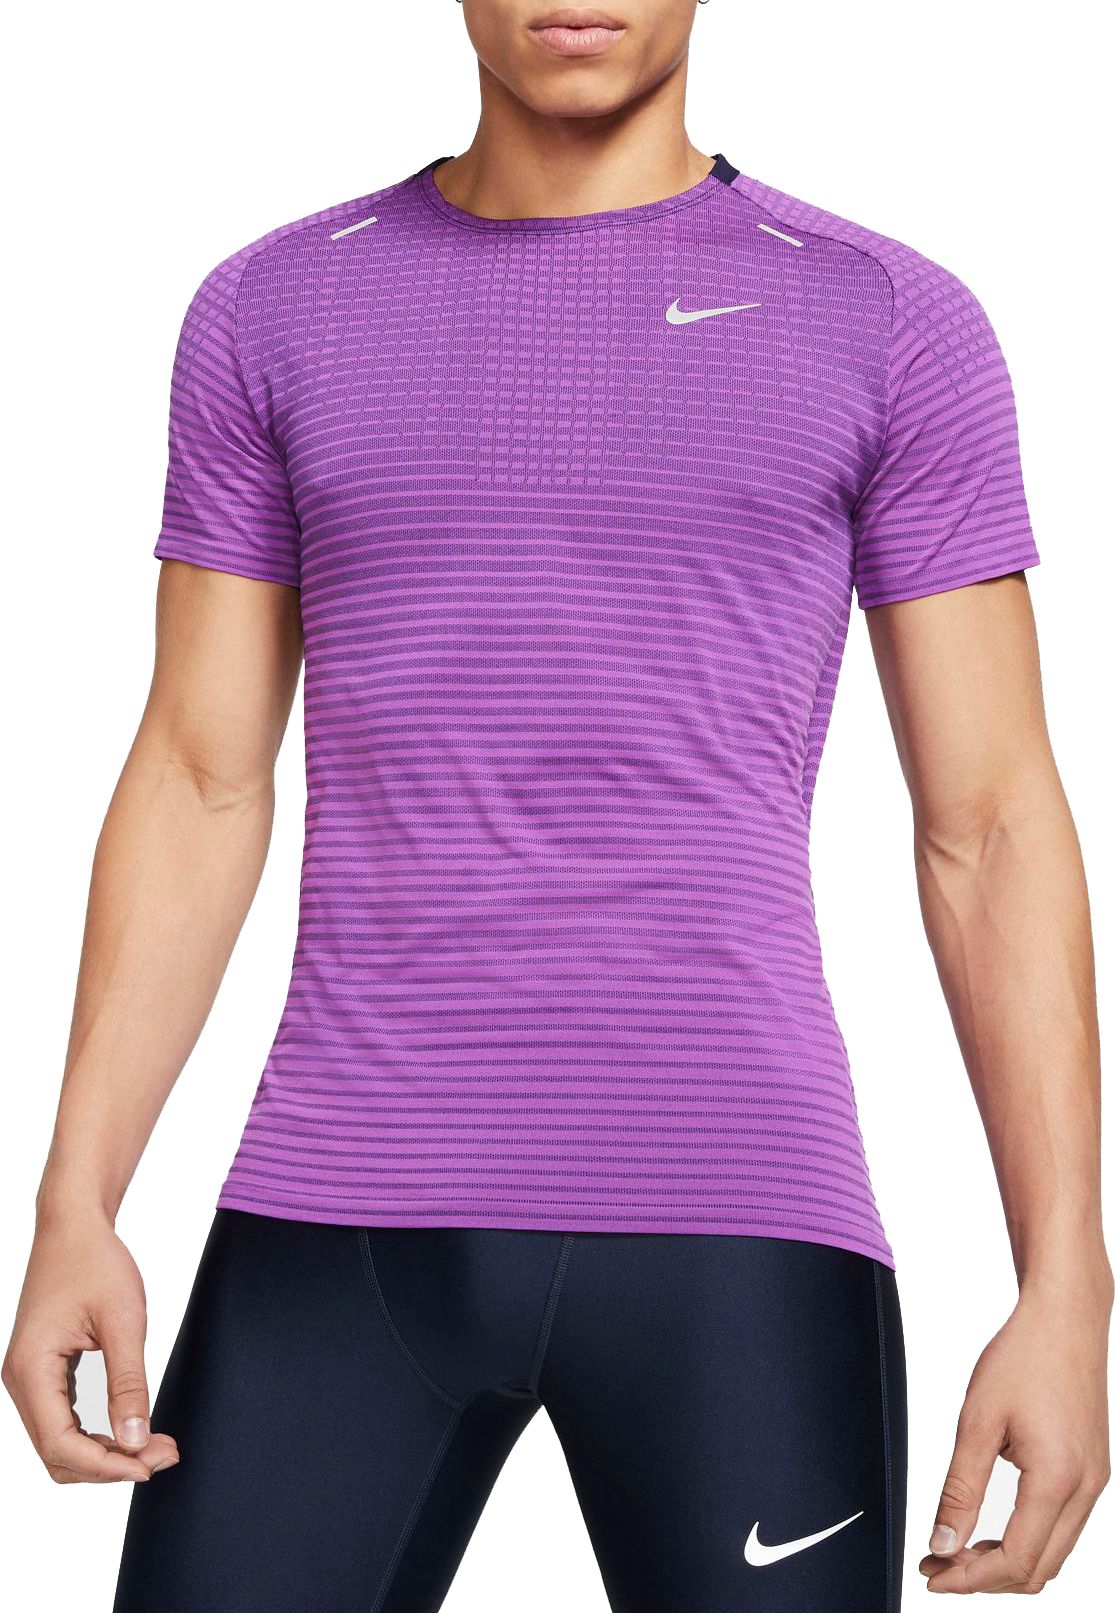 Nike Men's TechKnit Short Sleeve Running T-Shirt - .50